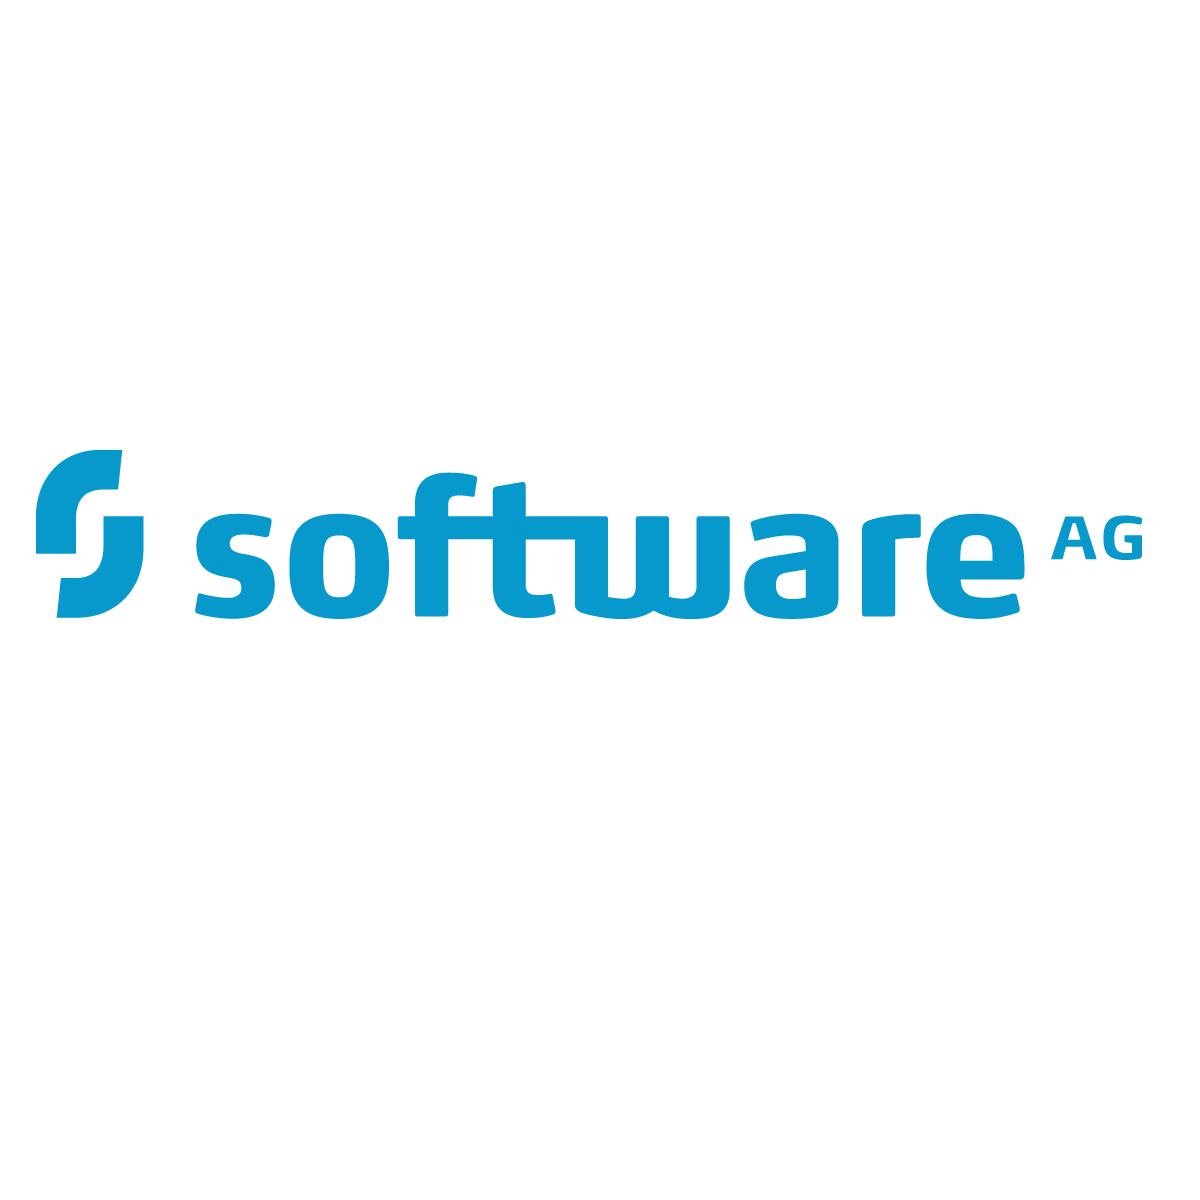 Software AG Apama Cumulocity JRE